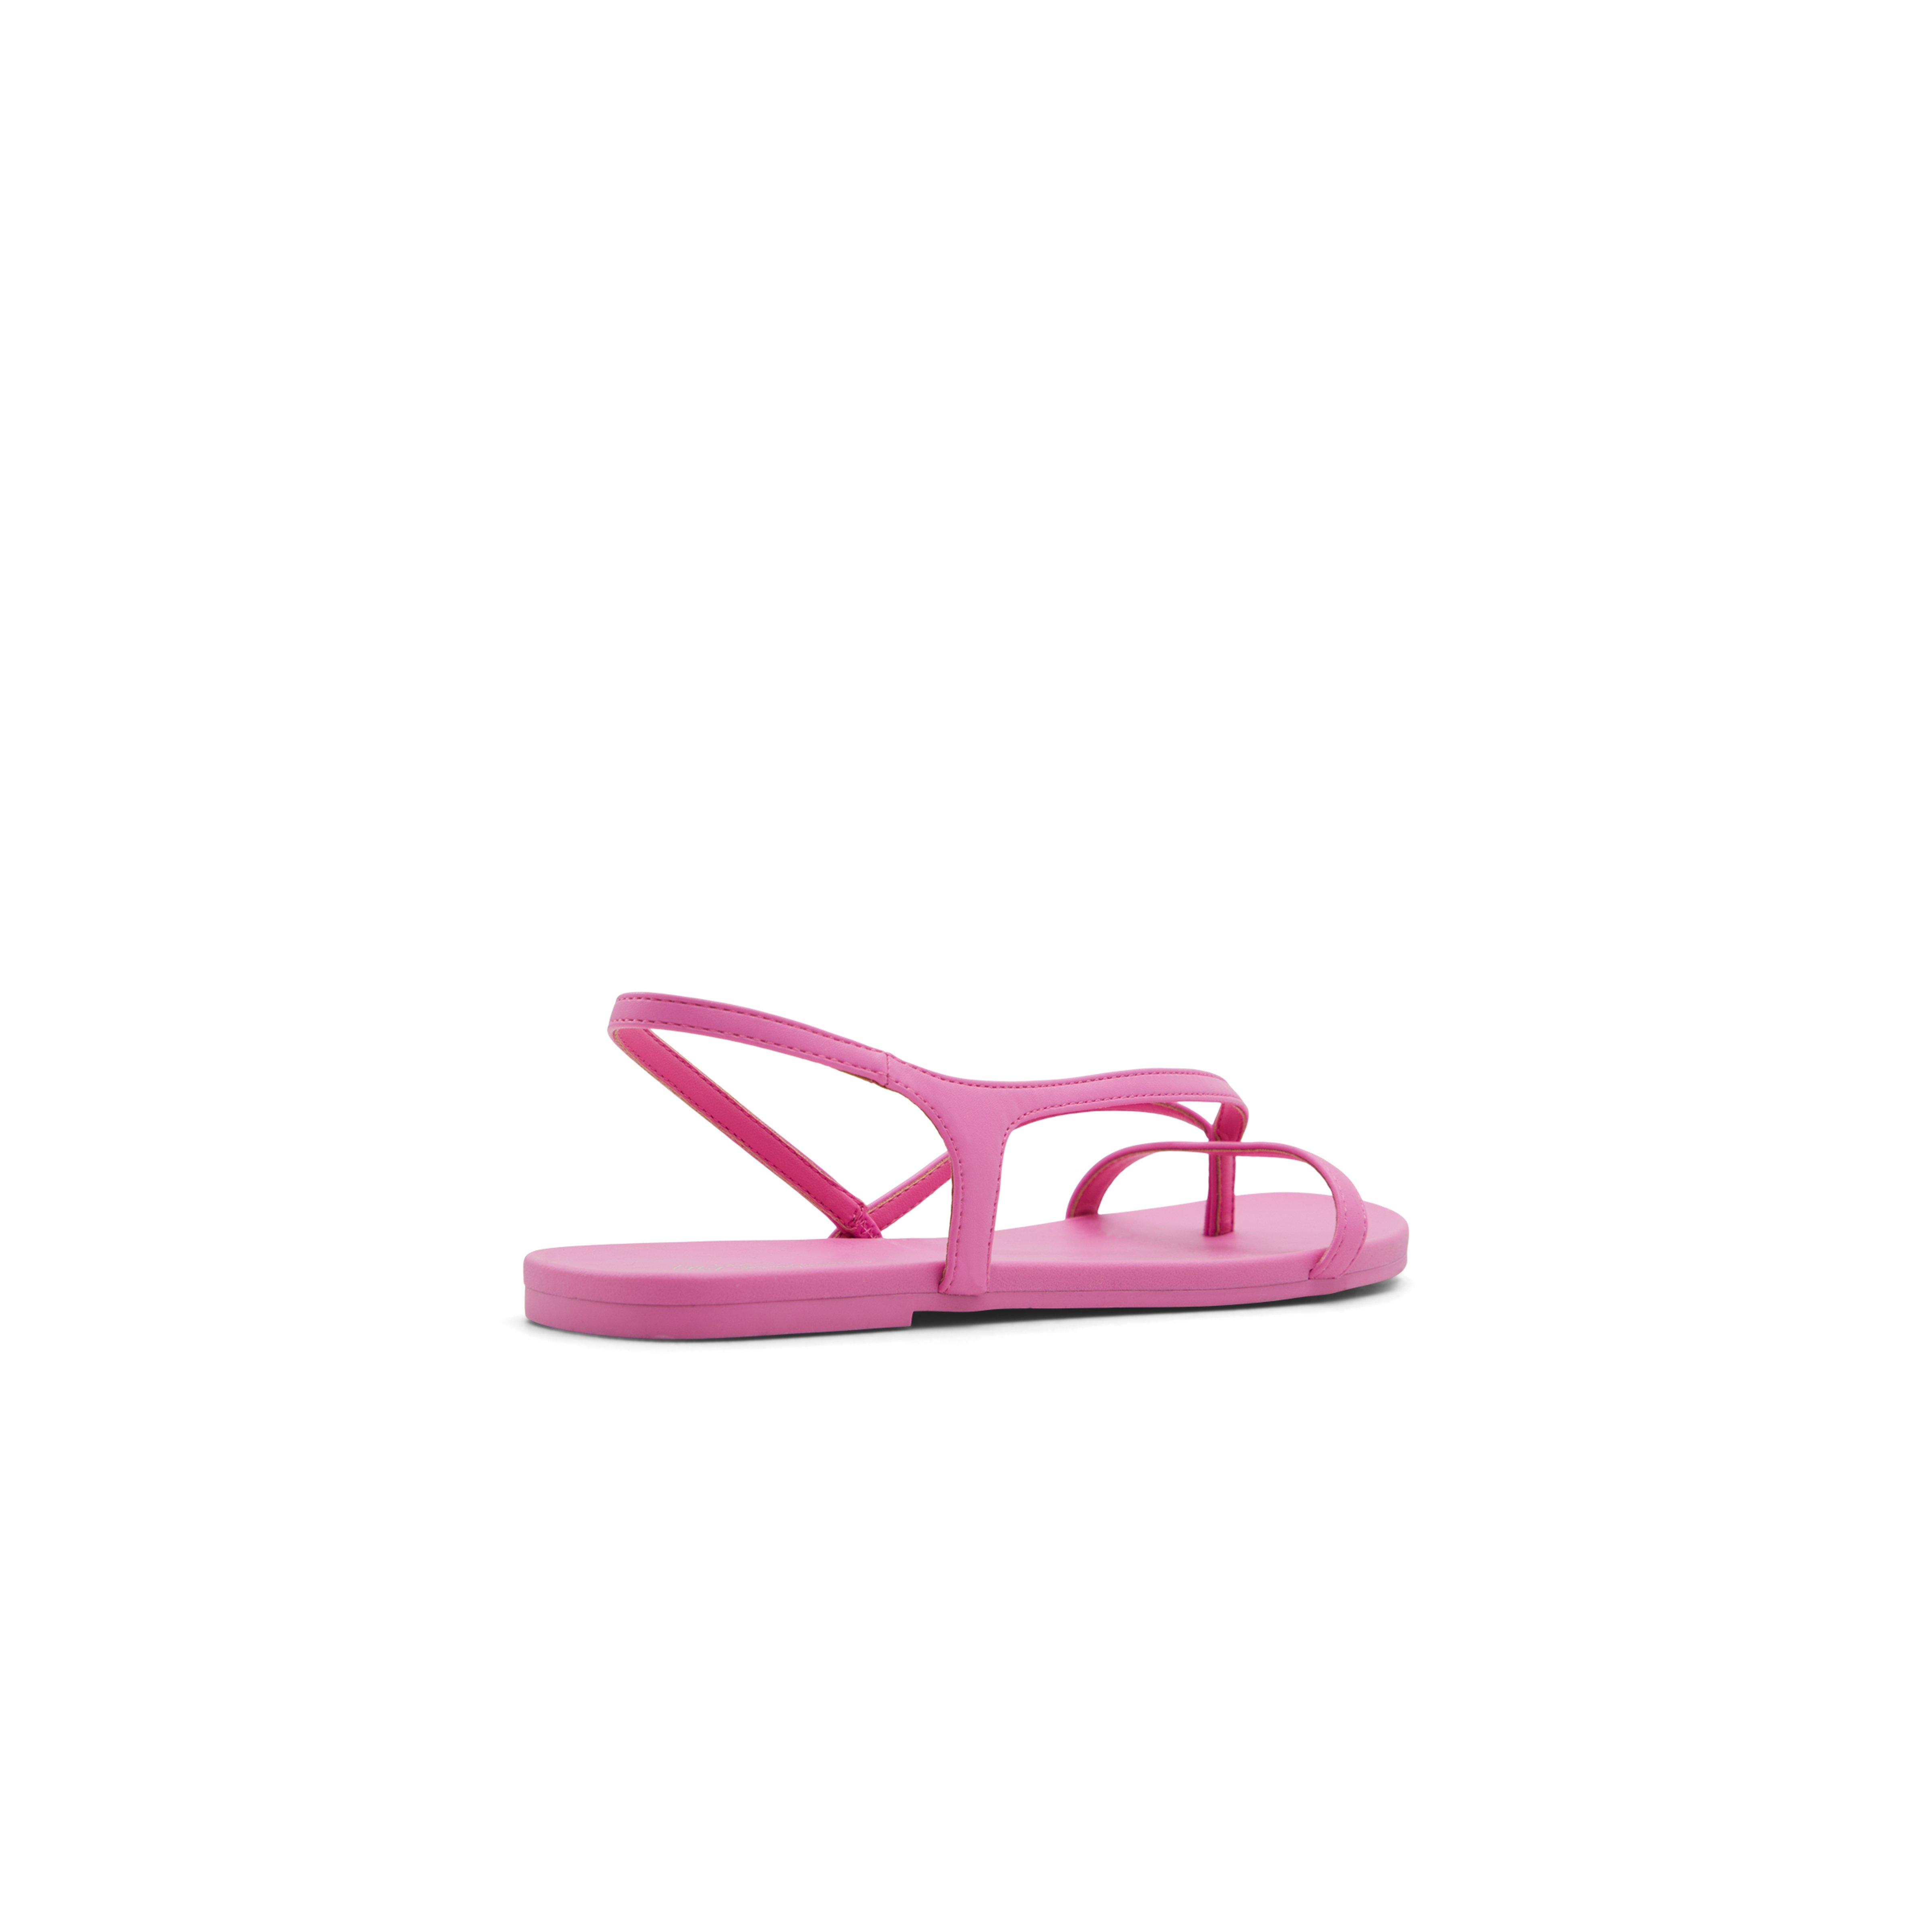 Montebello Women's Pink Flat Sandals image number 2